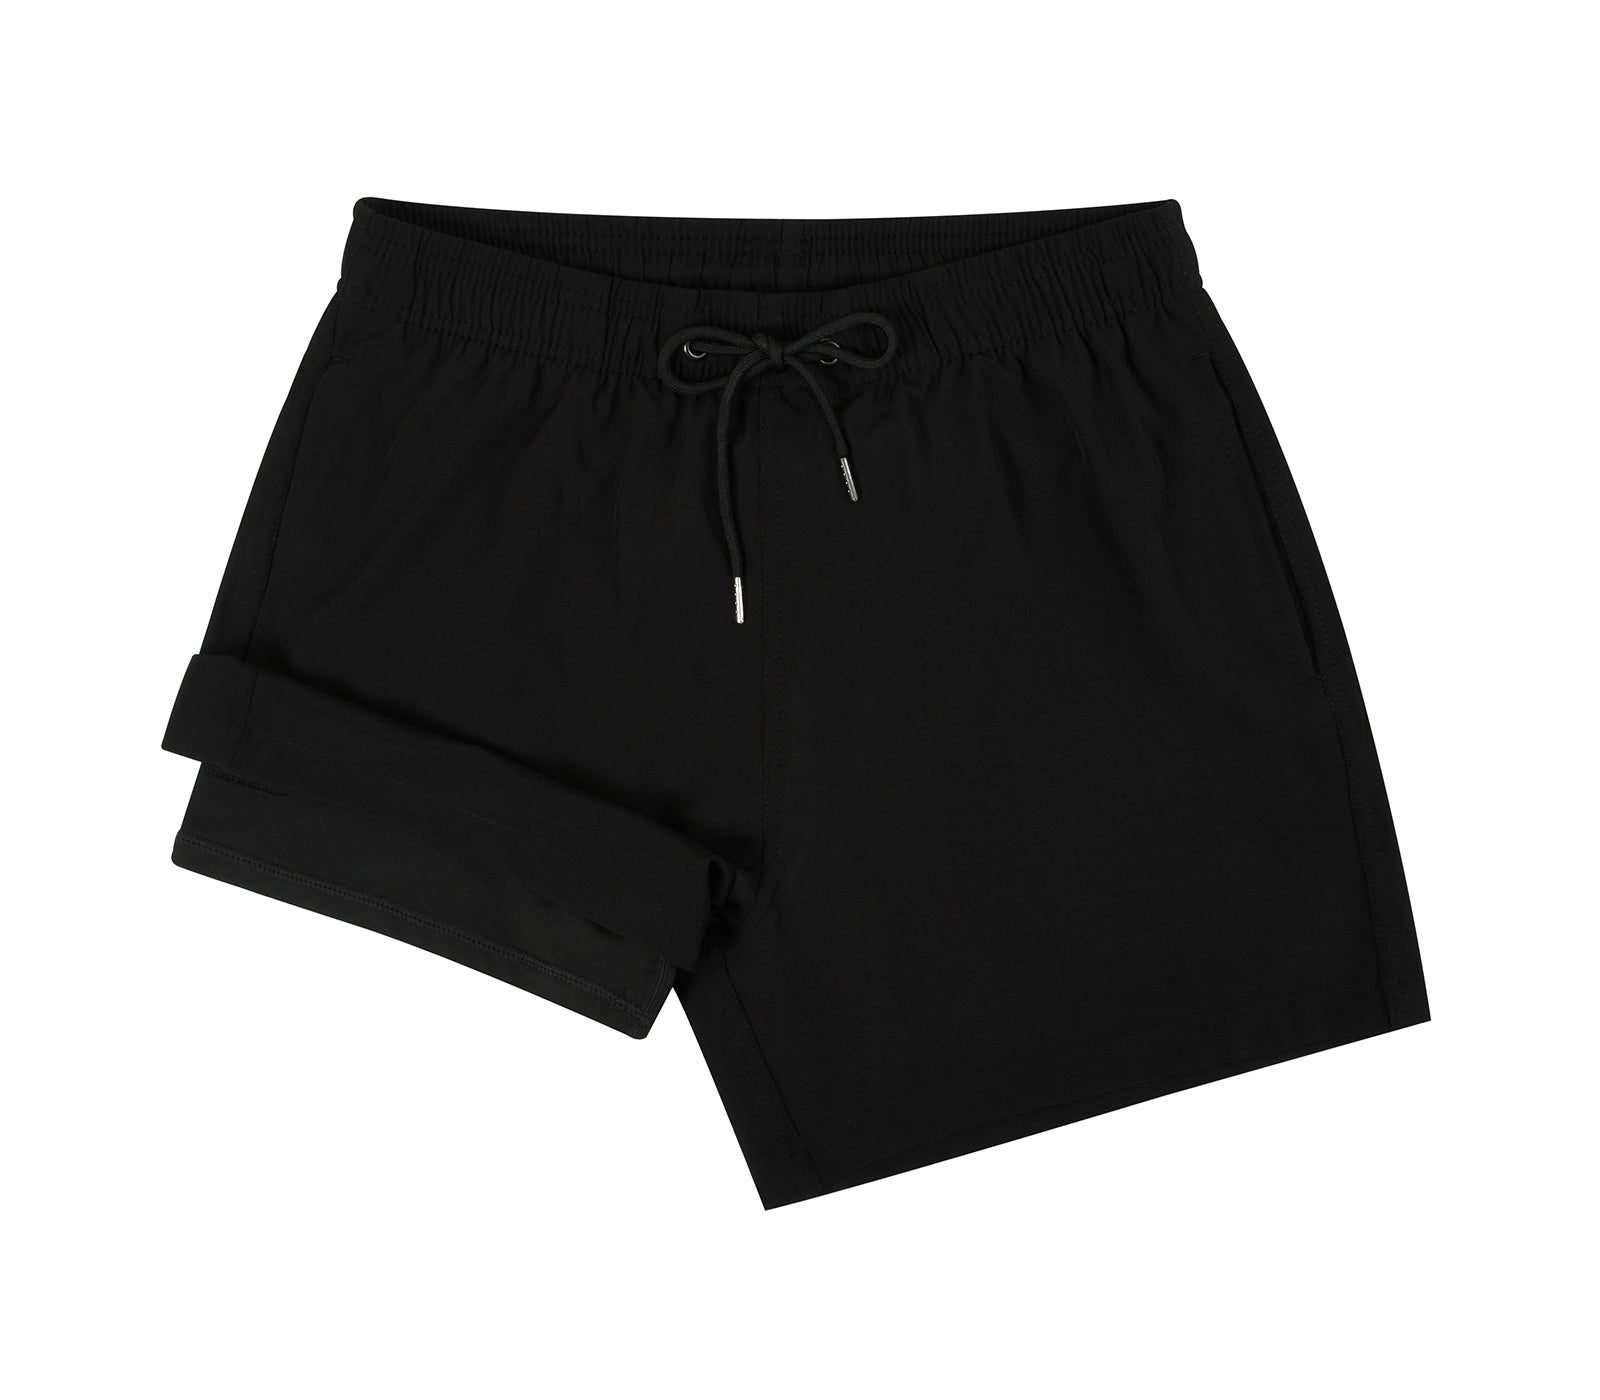 BRISIRA Mens Swim Trunks Swim Shorts Quick Dry 5 inch Inseam Beach Shorts  with Compression Liner and Zipper Pocket Black